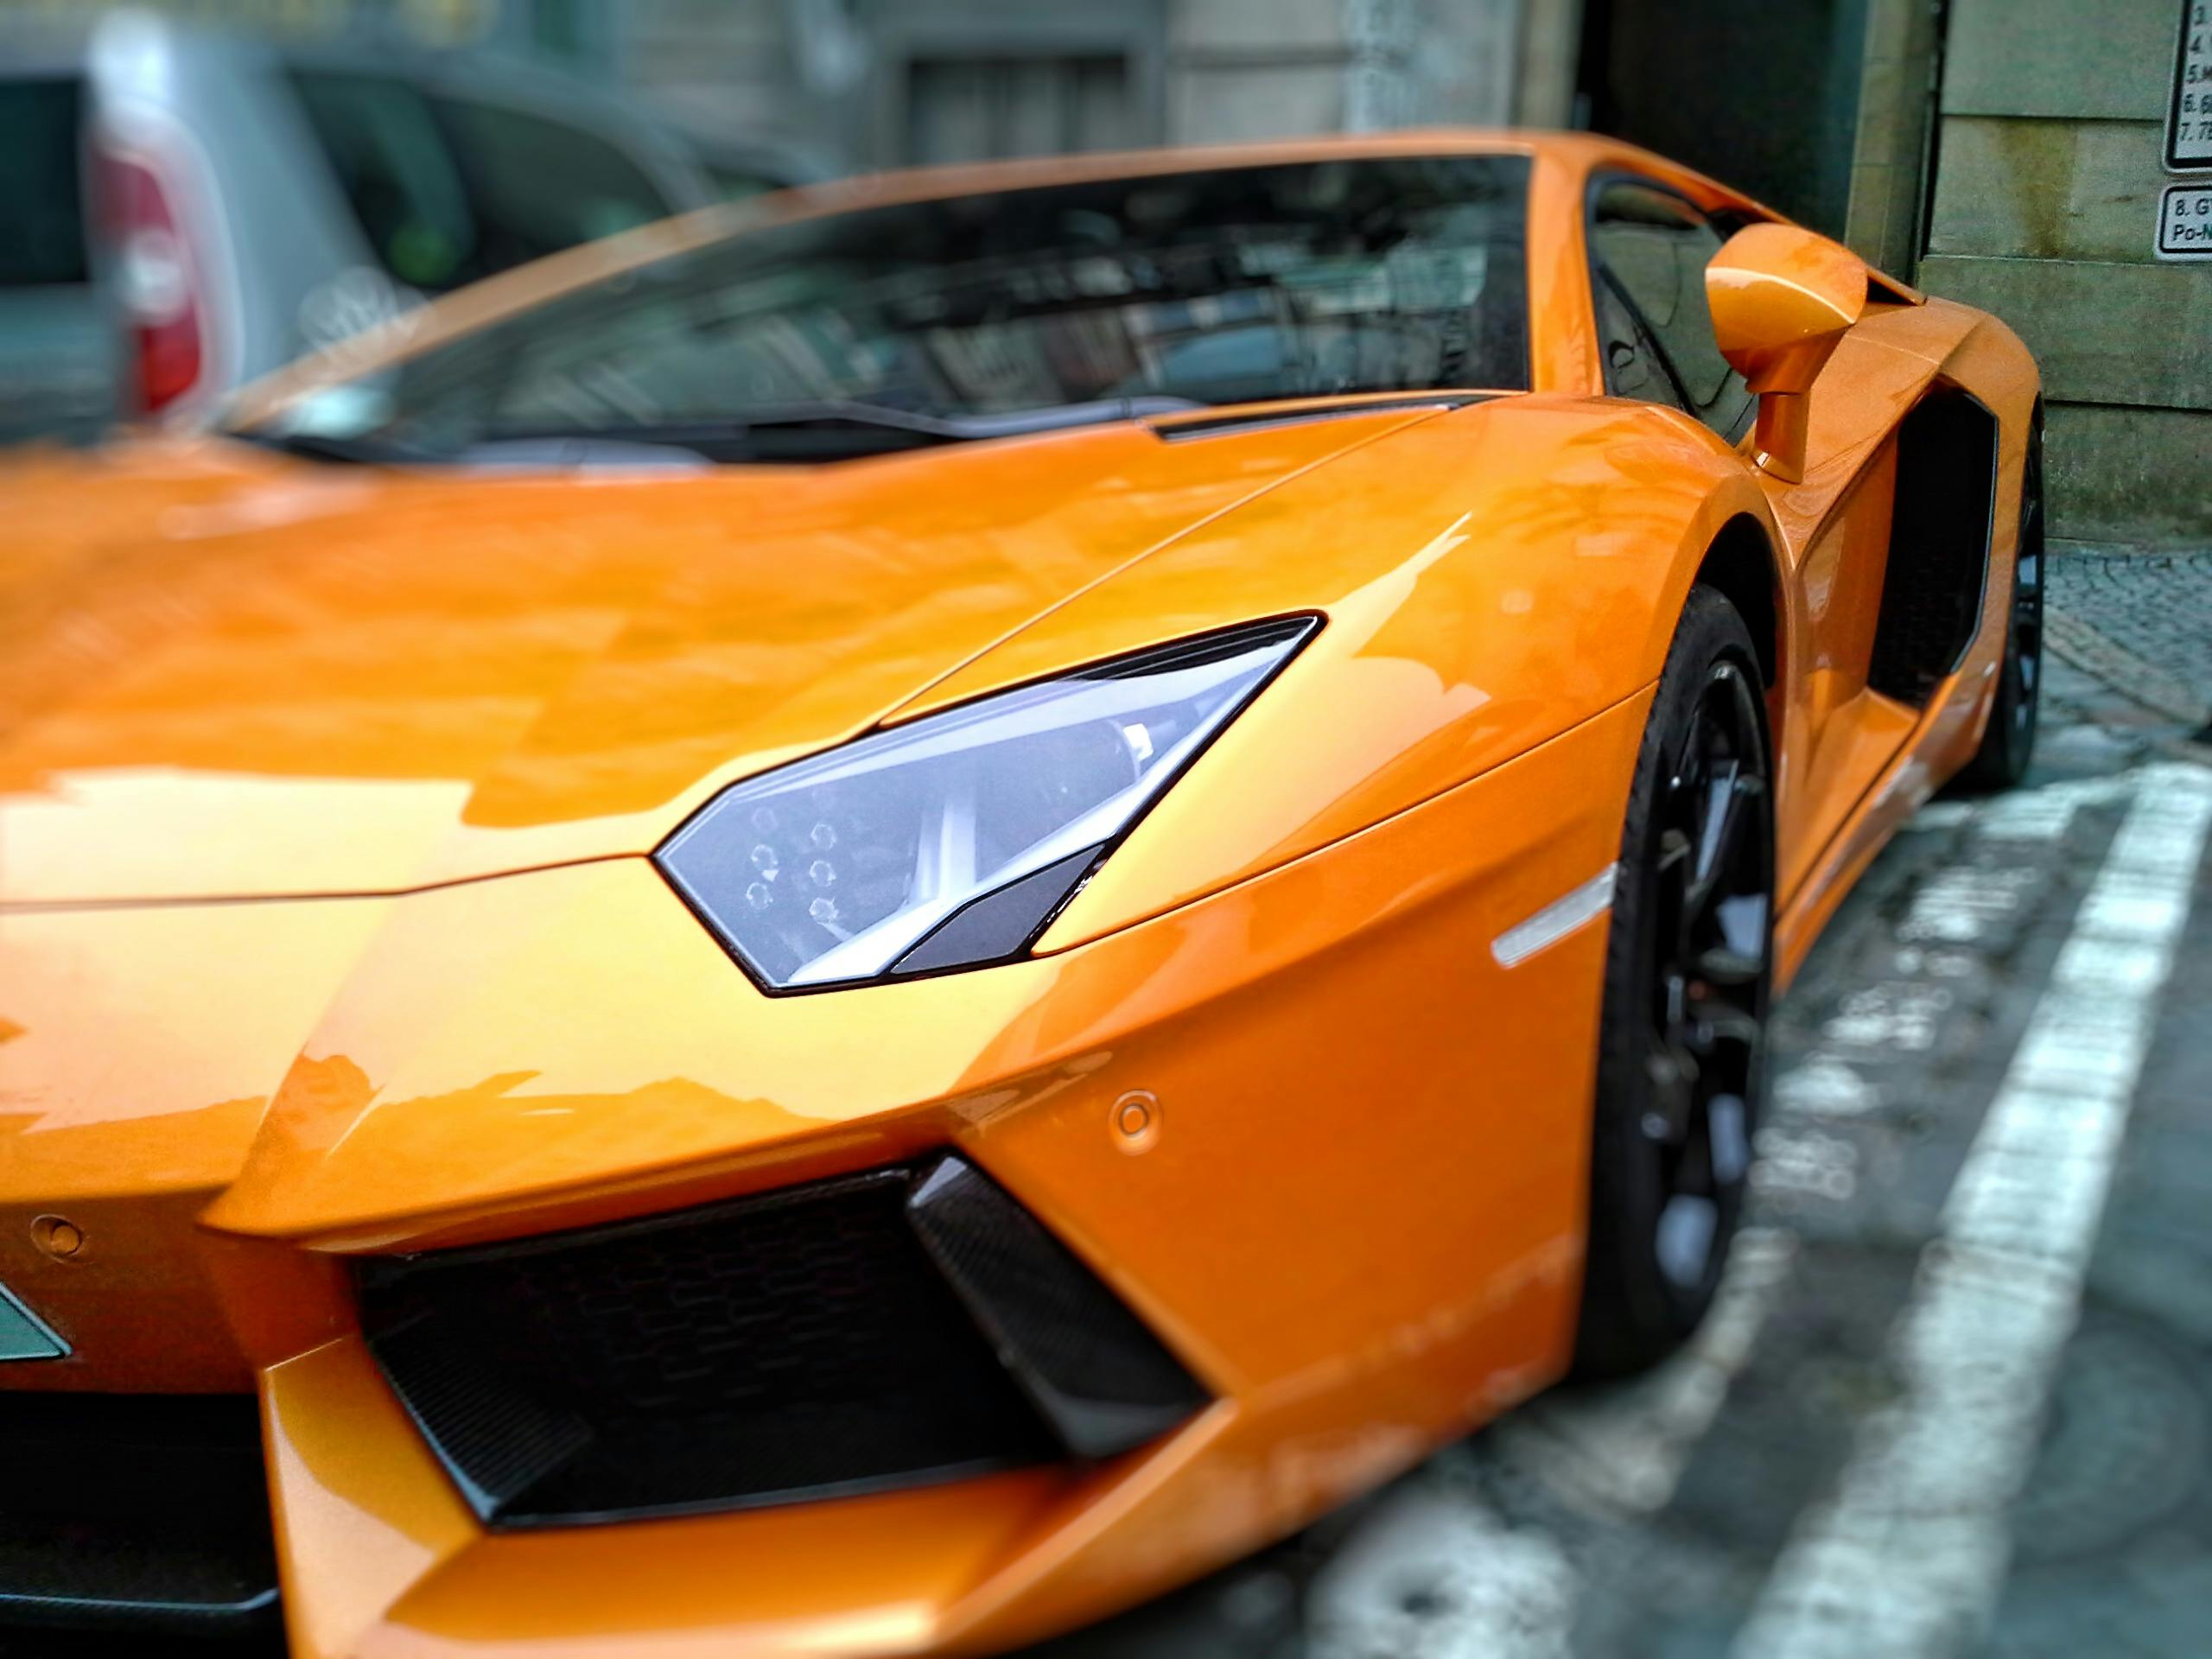 Lamborghini Photos, Download The BEST Free Lamborghini Stock Photos & HD  Images